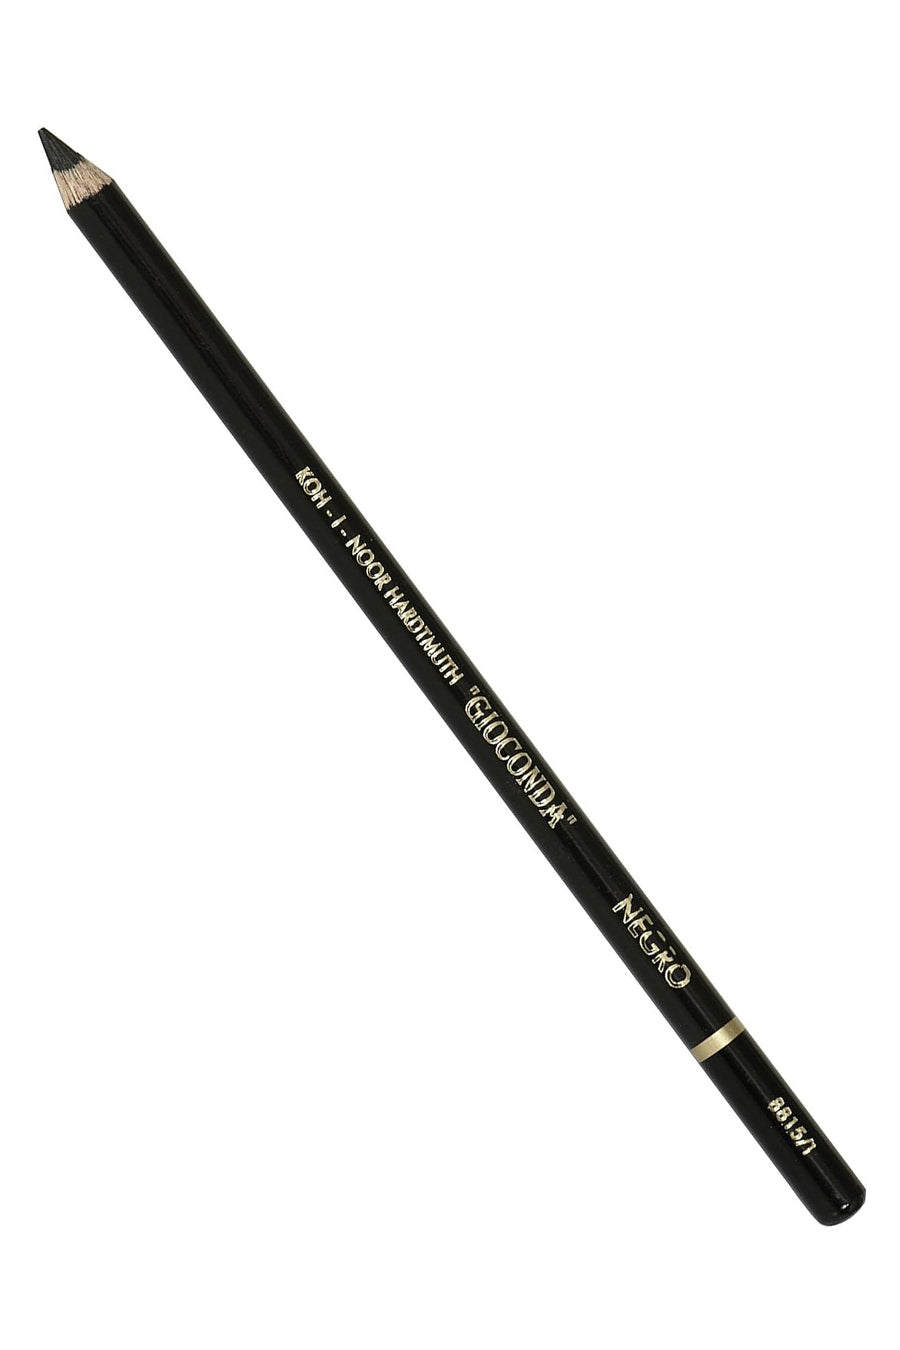 Gioconda® Chalk Pencils